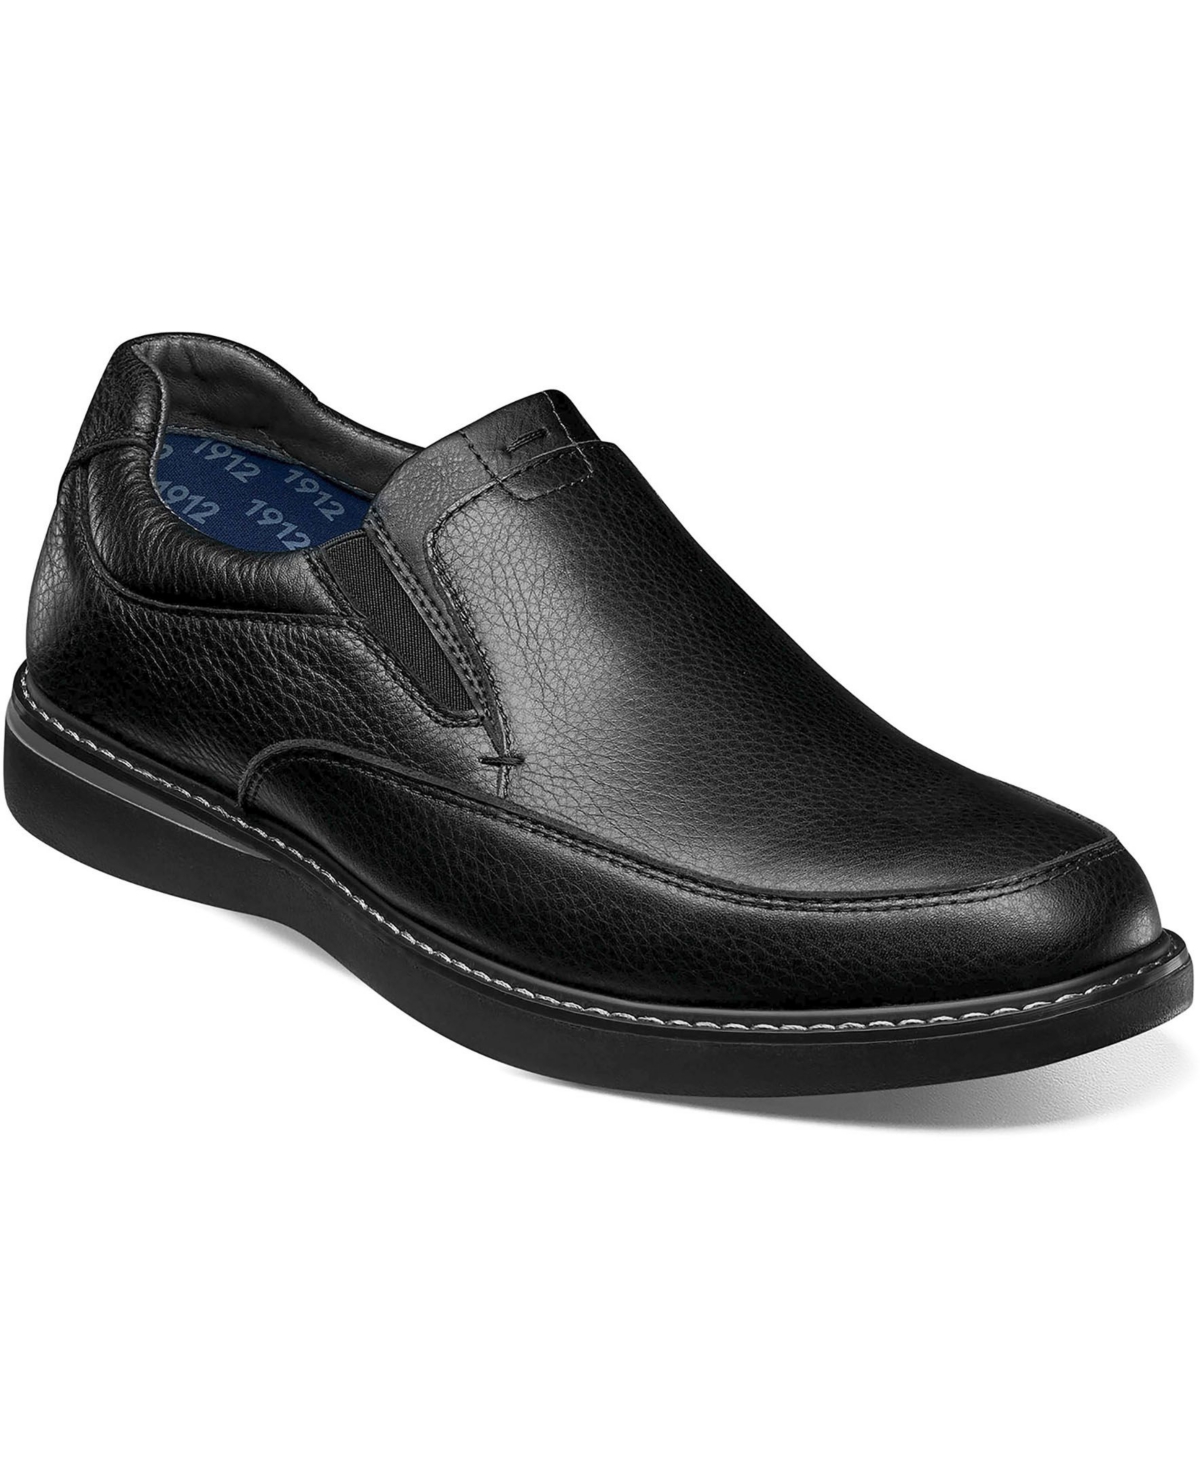 Men's Bayridge Moccasin Toe Slip-On Loafers - Brown Multi